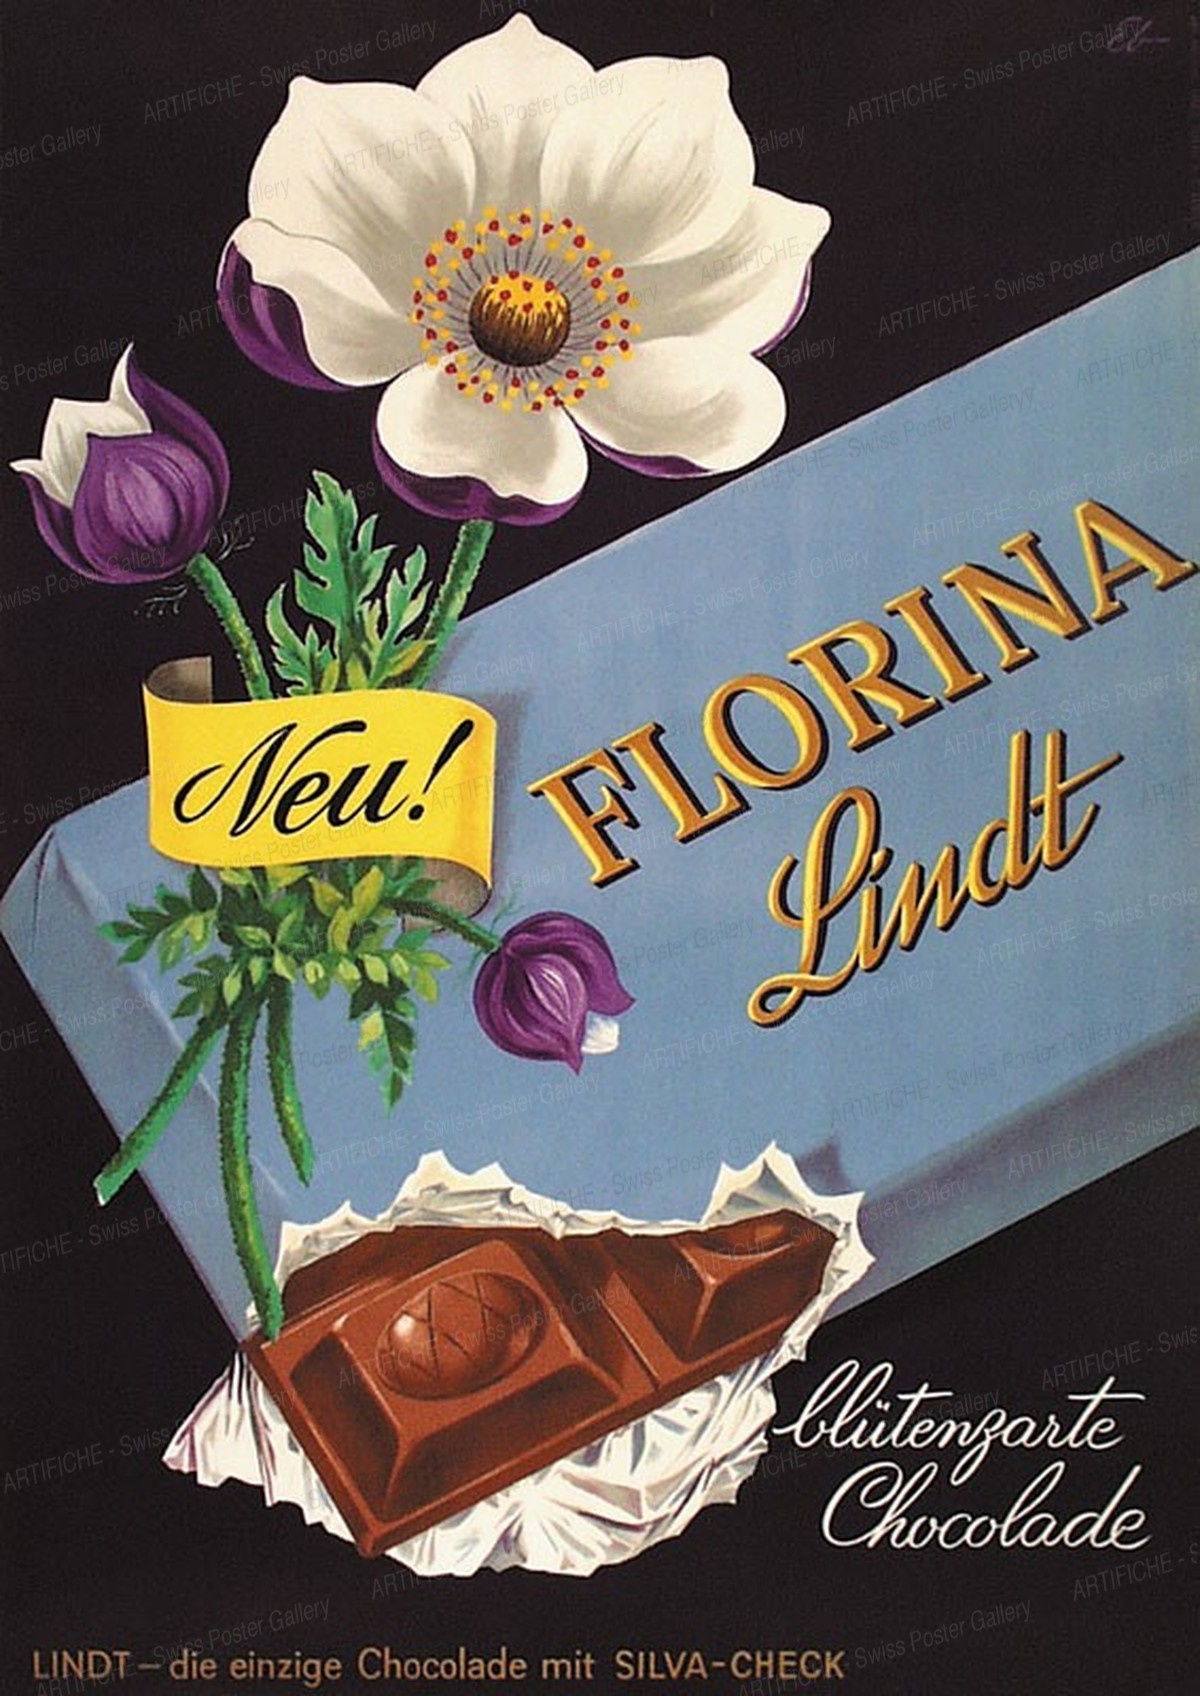 Lindt Milk Chocolate, Emil Ebner